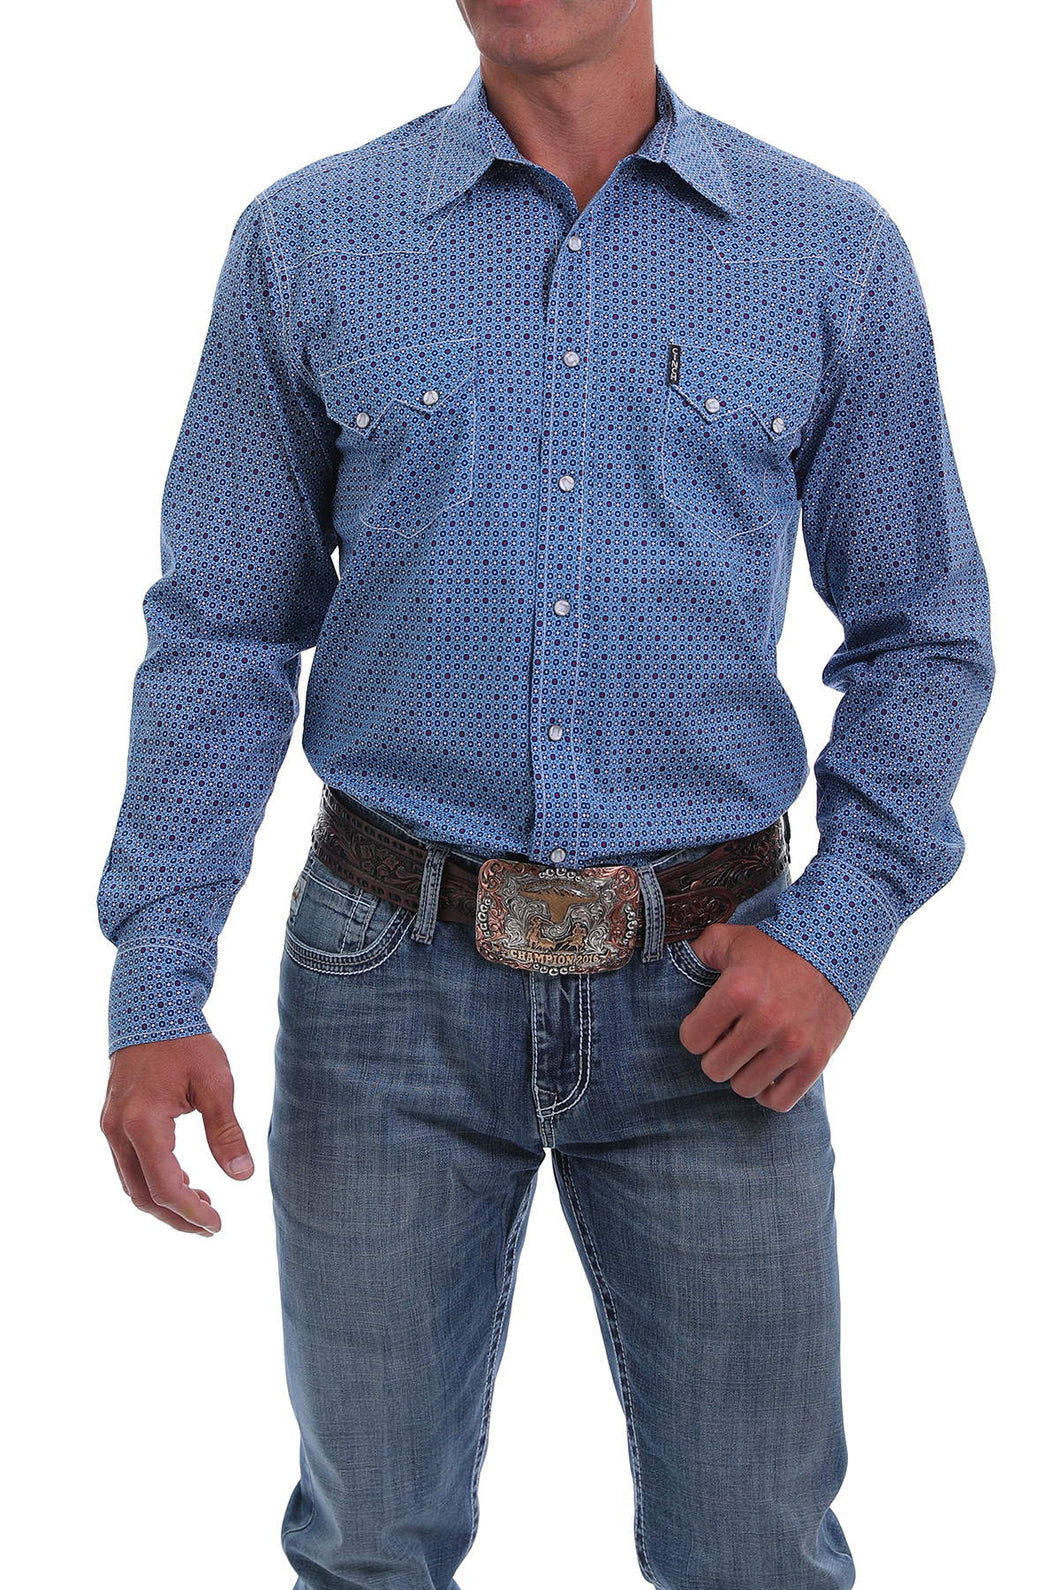 Men's Modern Fit Blue Long Sleeve Shirt By Cinch